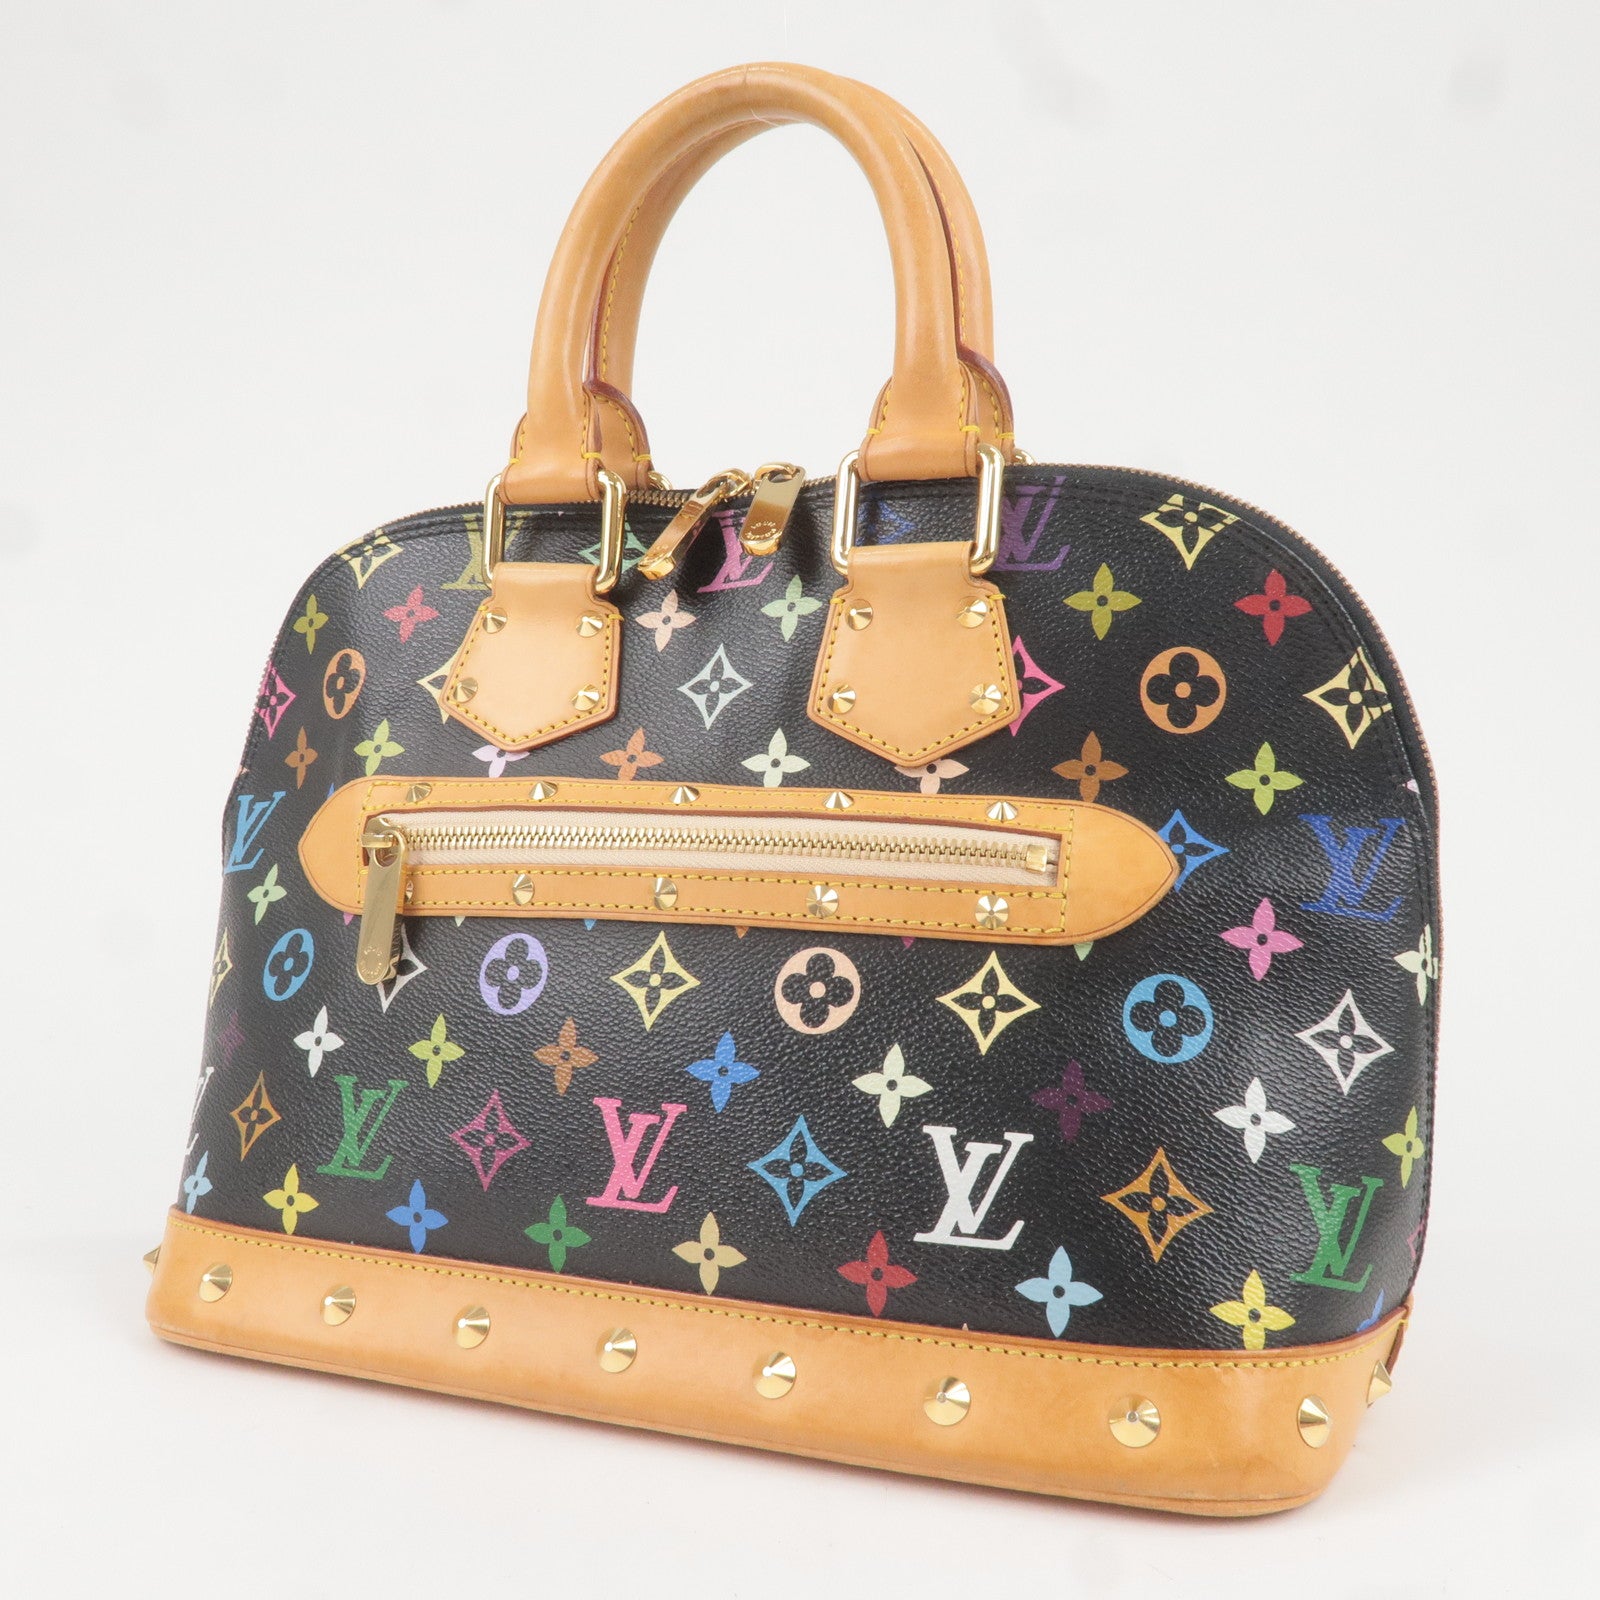 Authentic Louis Vuitton Alma Bag Black Noir Multicolor Handbag